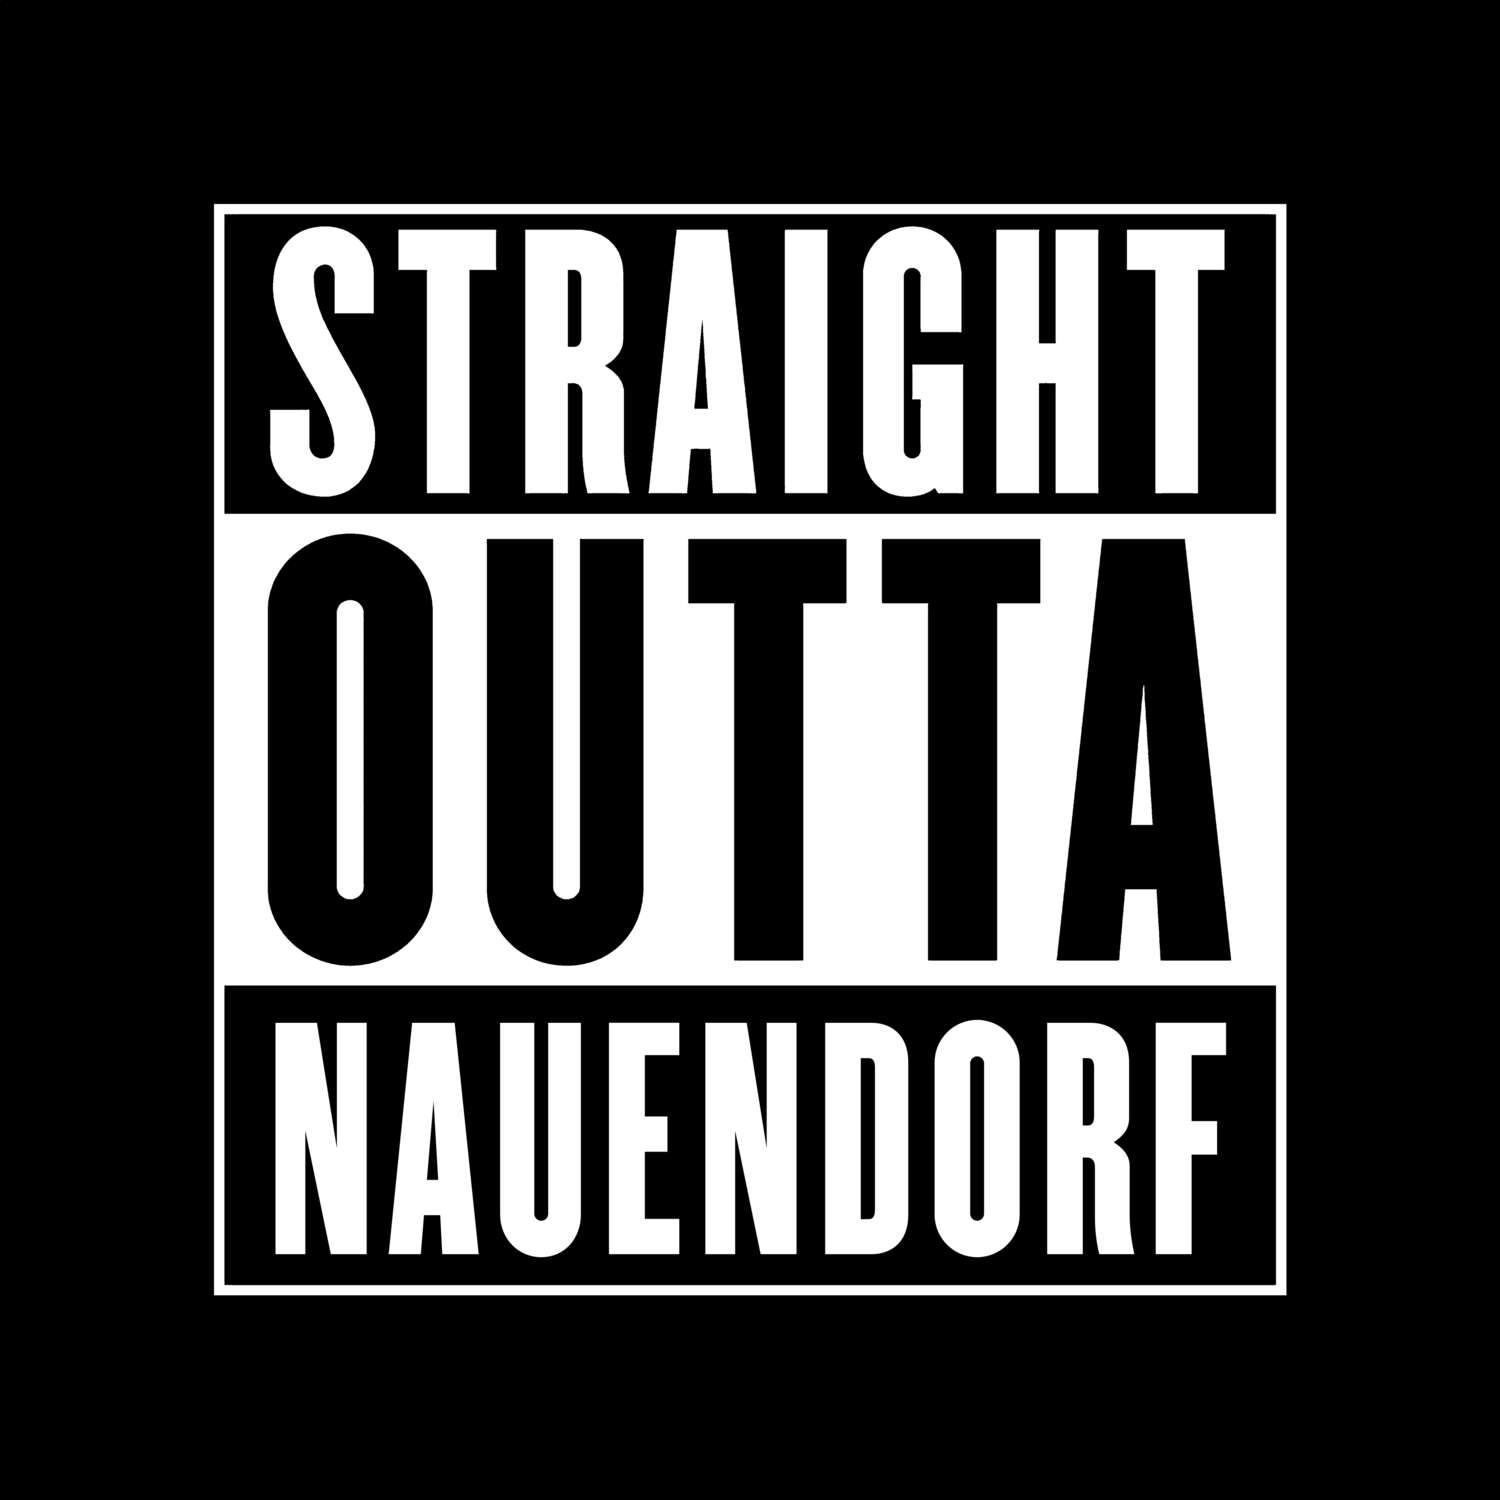 Nauendorf T-Shirt »Straight Outta«